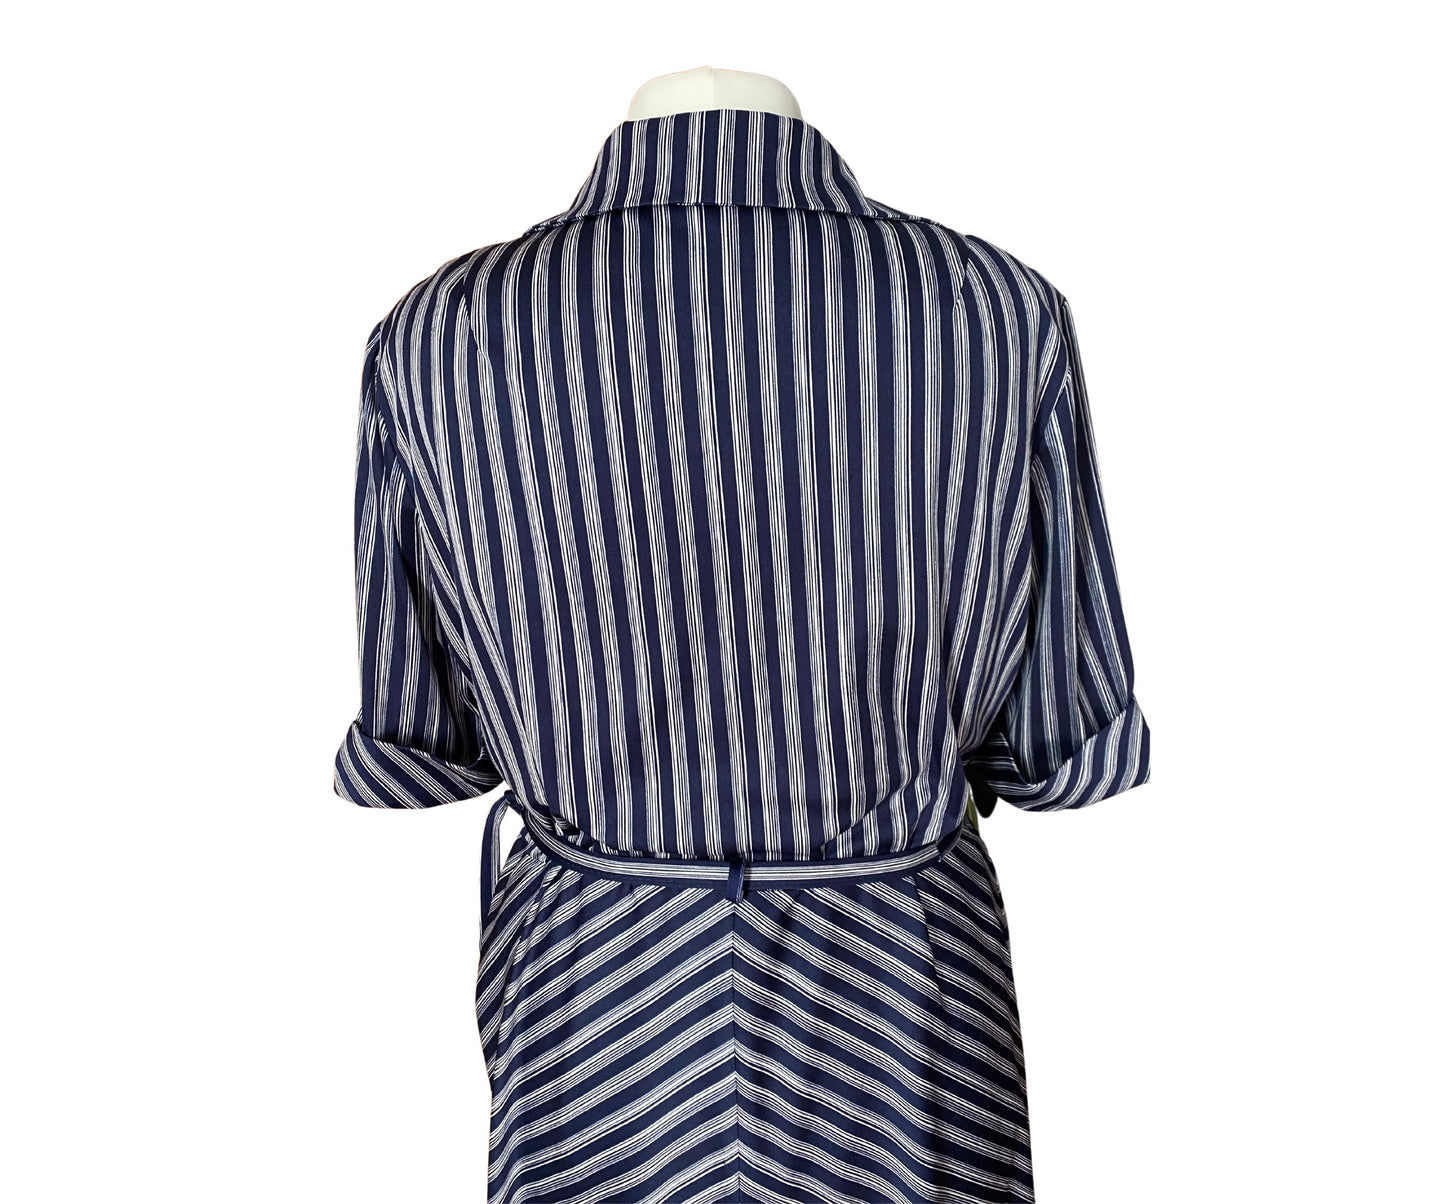 70s blue and white striped midi dress. Approx  U.K size 18-20